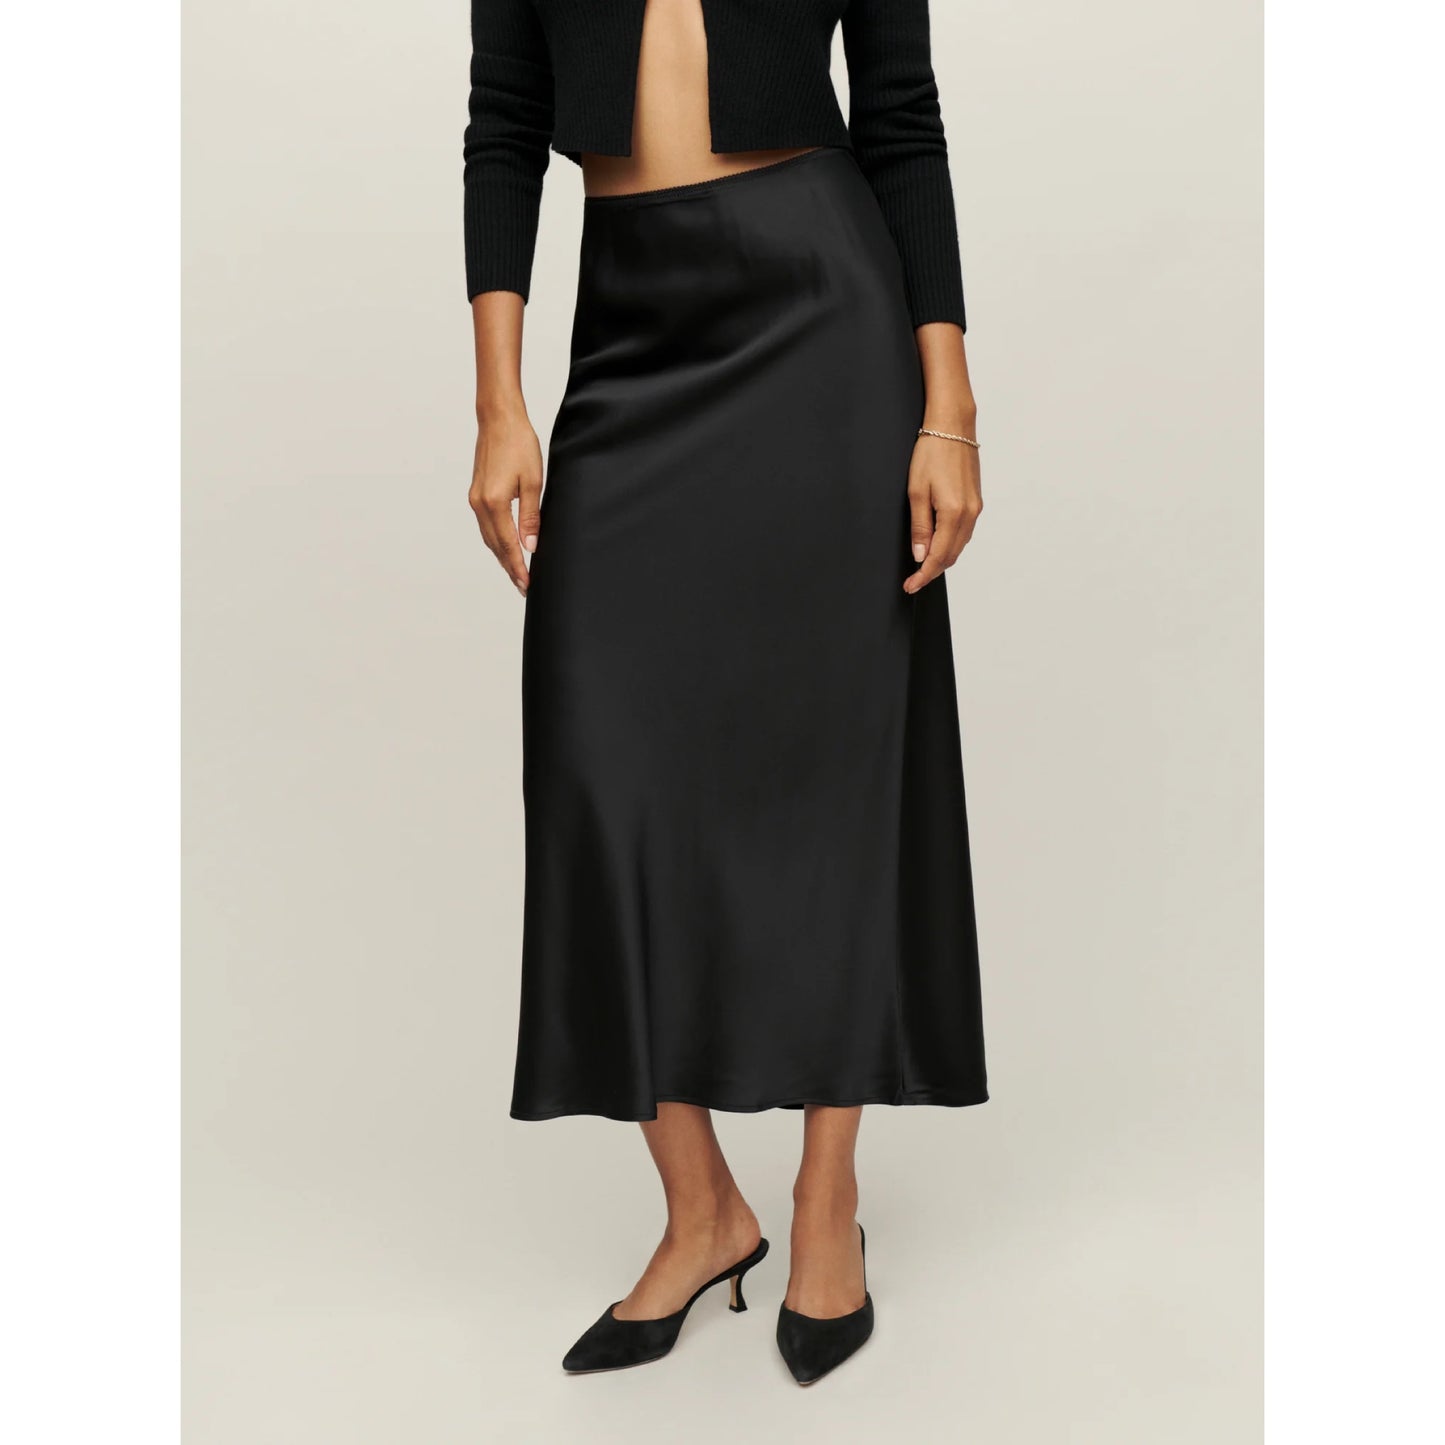 Reformation Silk Skirt